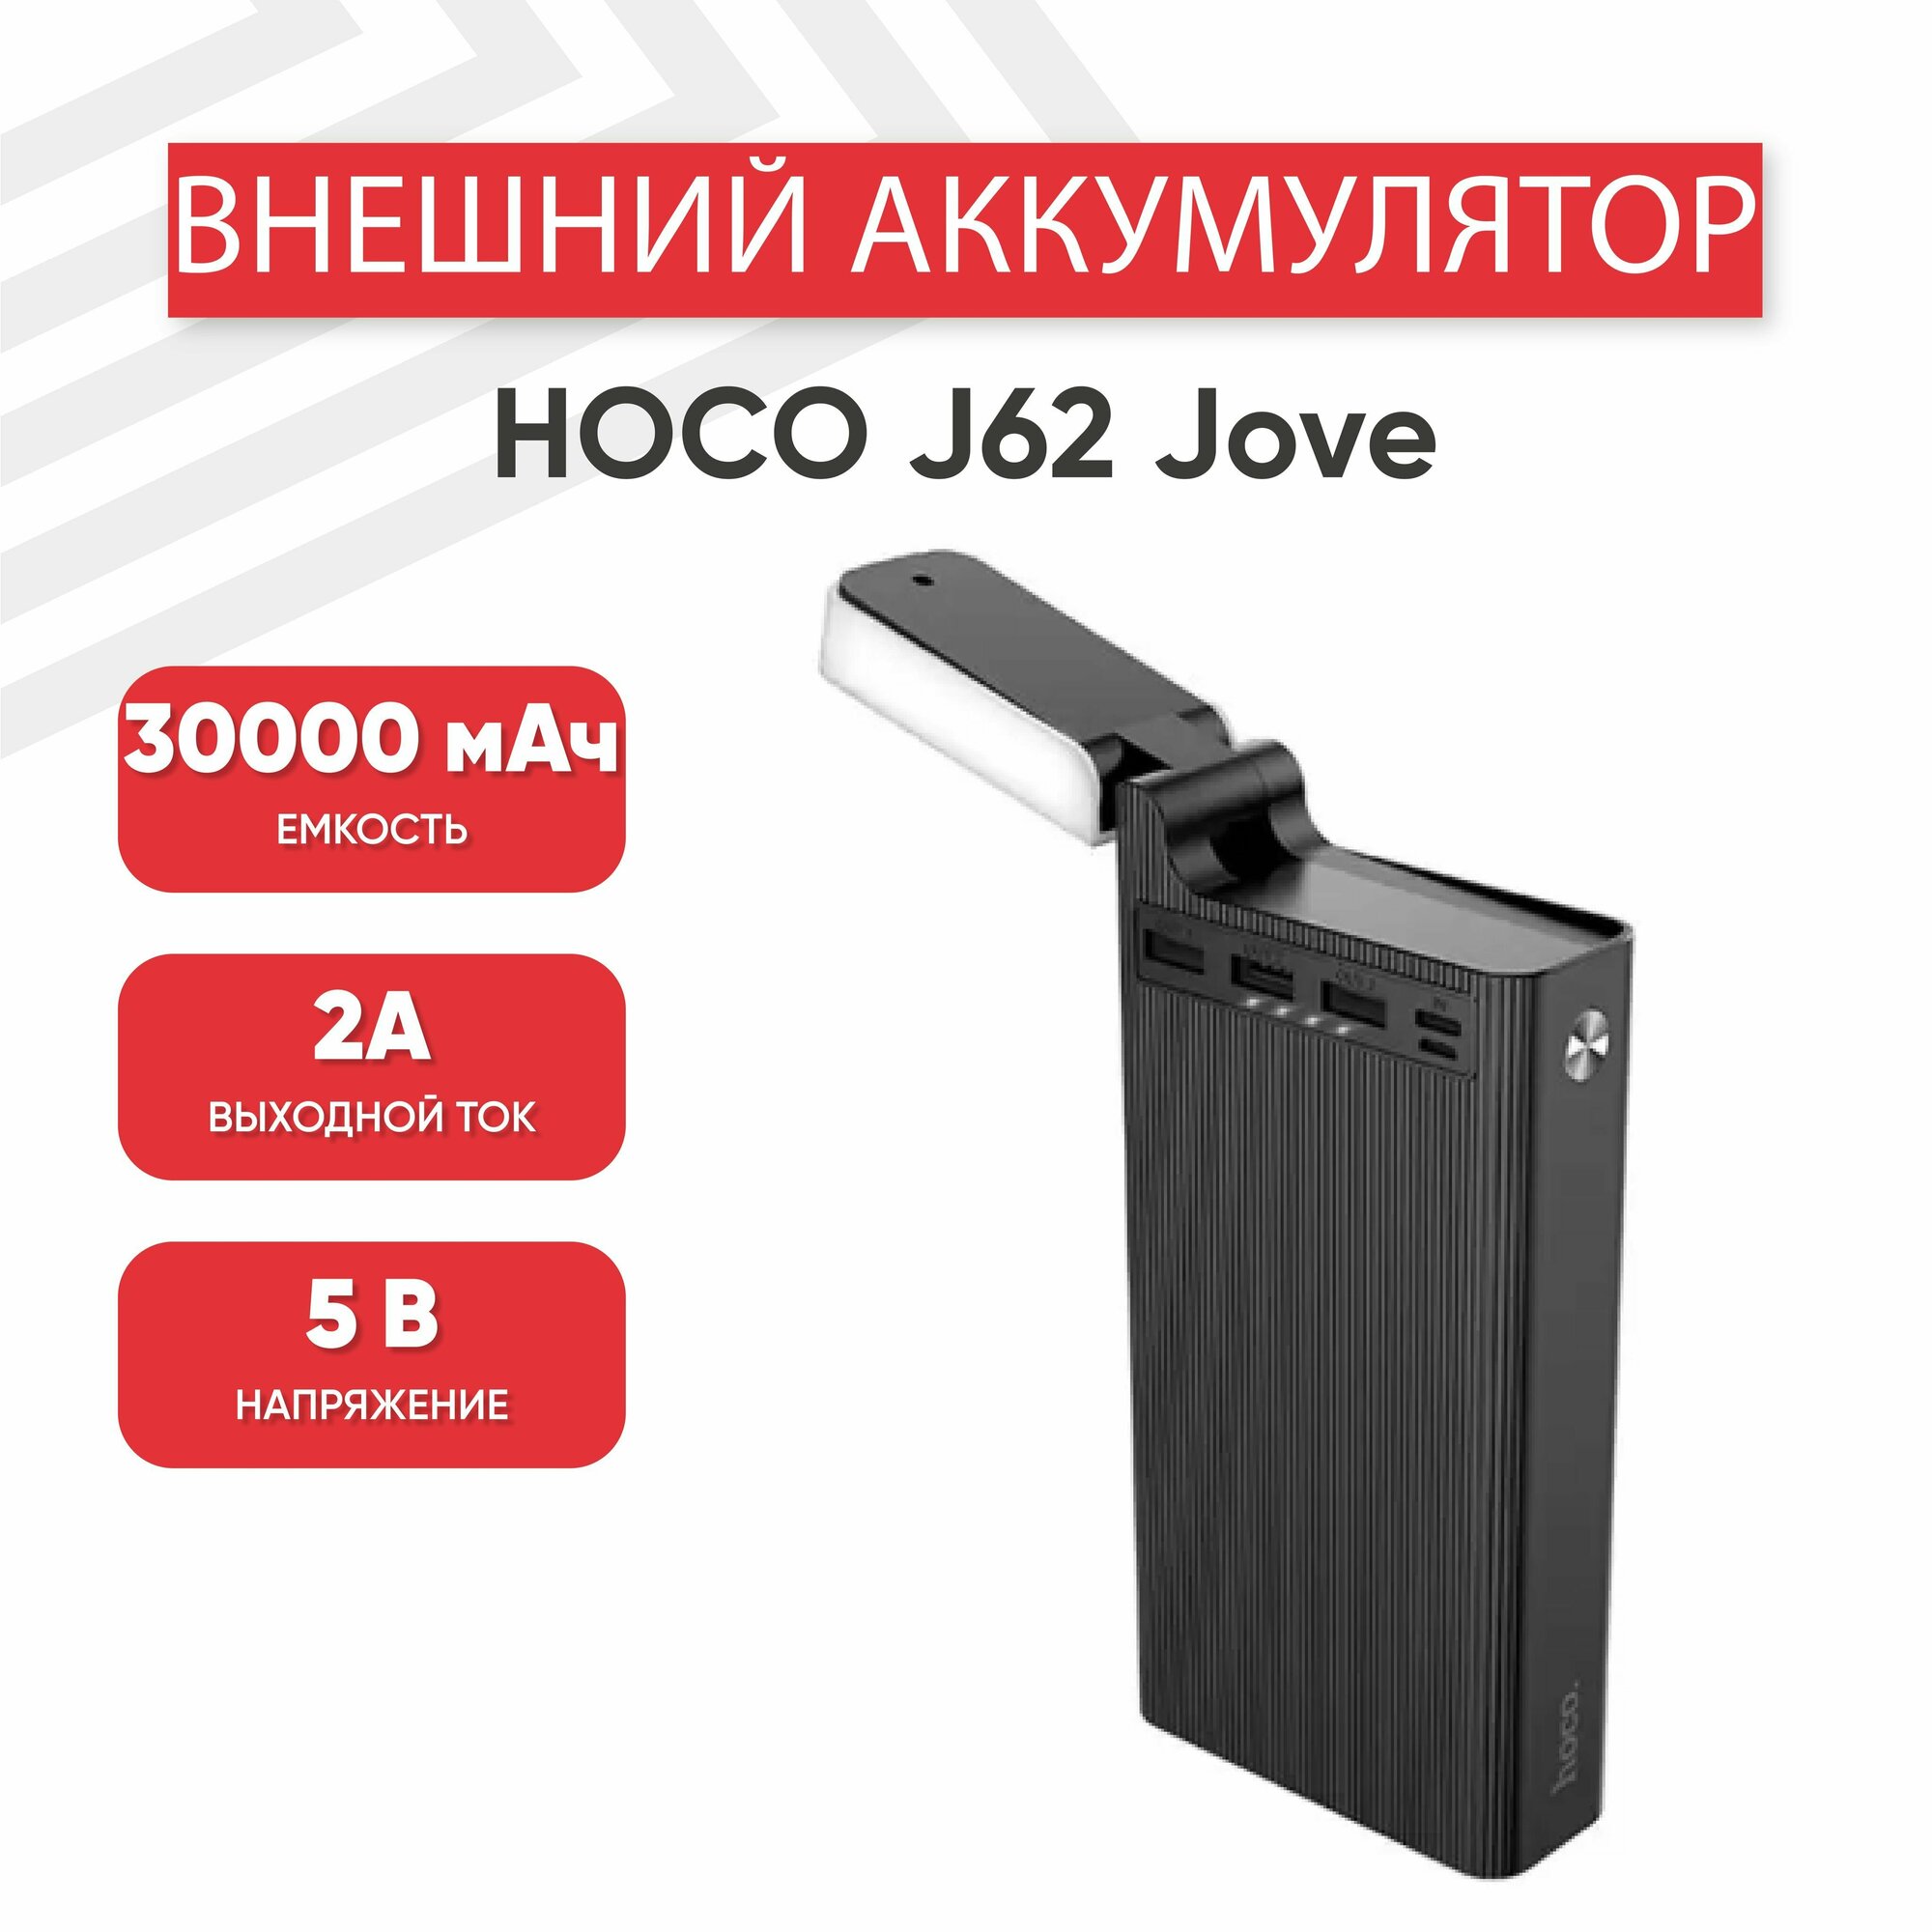 Внешний аккумулятор (Powerbank, АКБ) Hoco J62 Jove, 30000мАч, 2А, настольная лампа, Li-Pol, черный